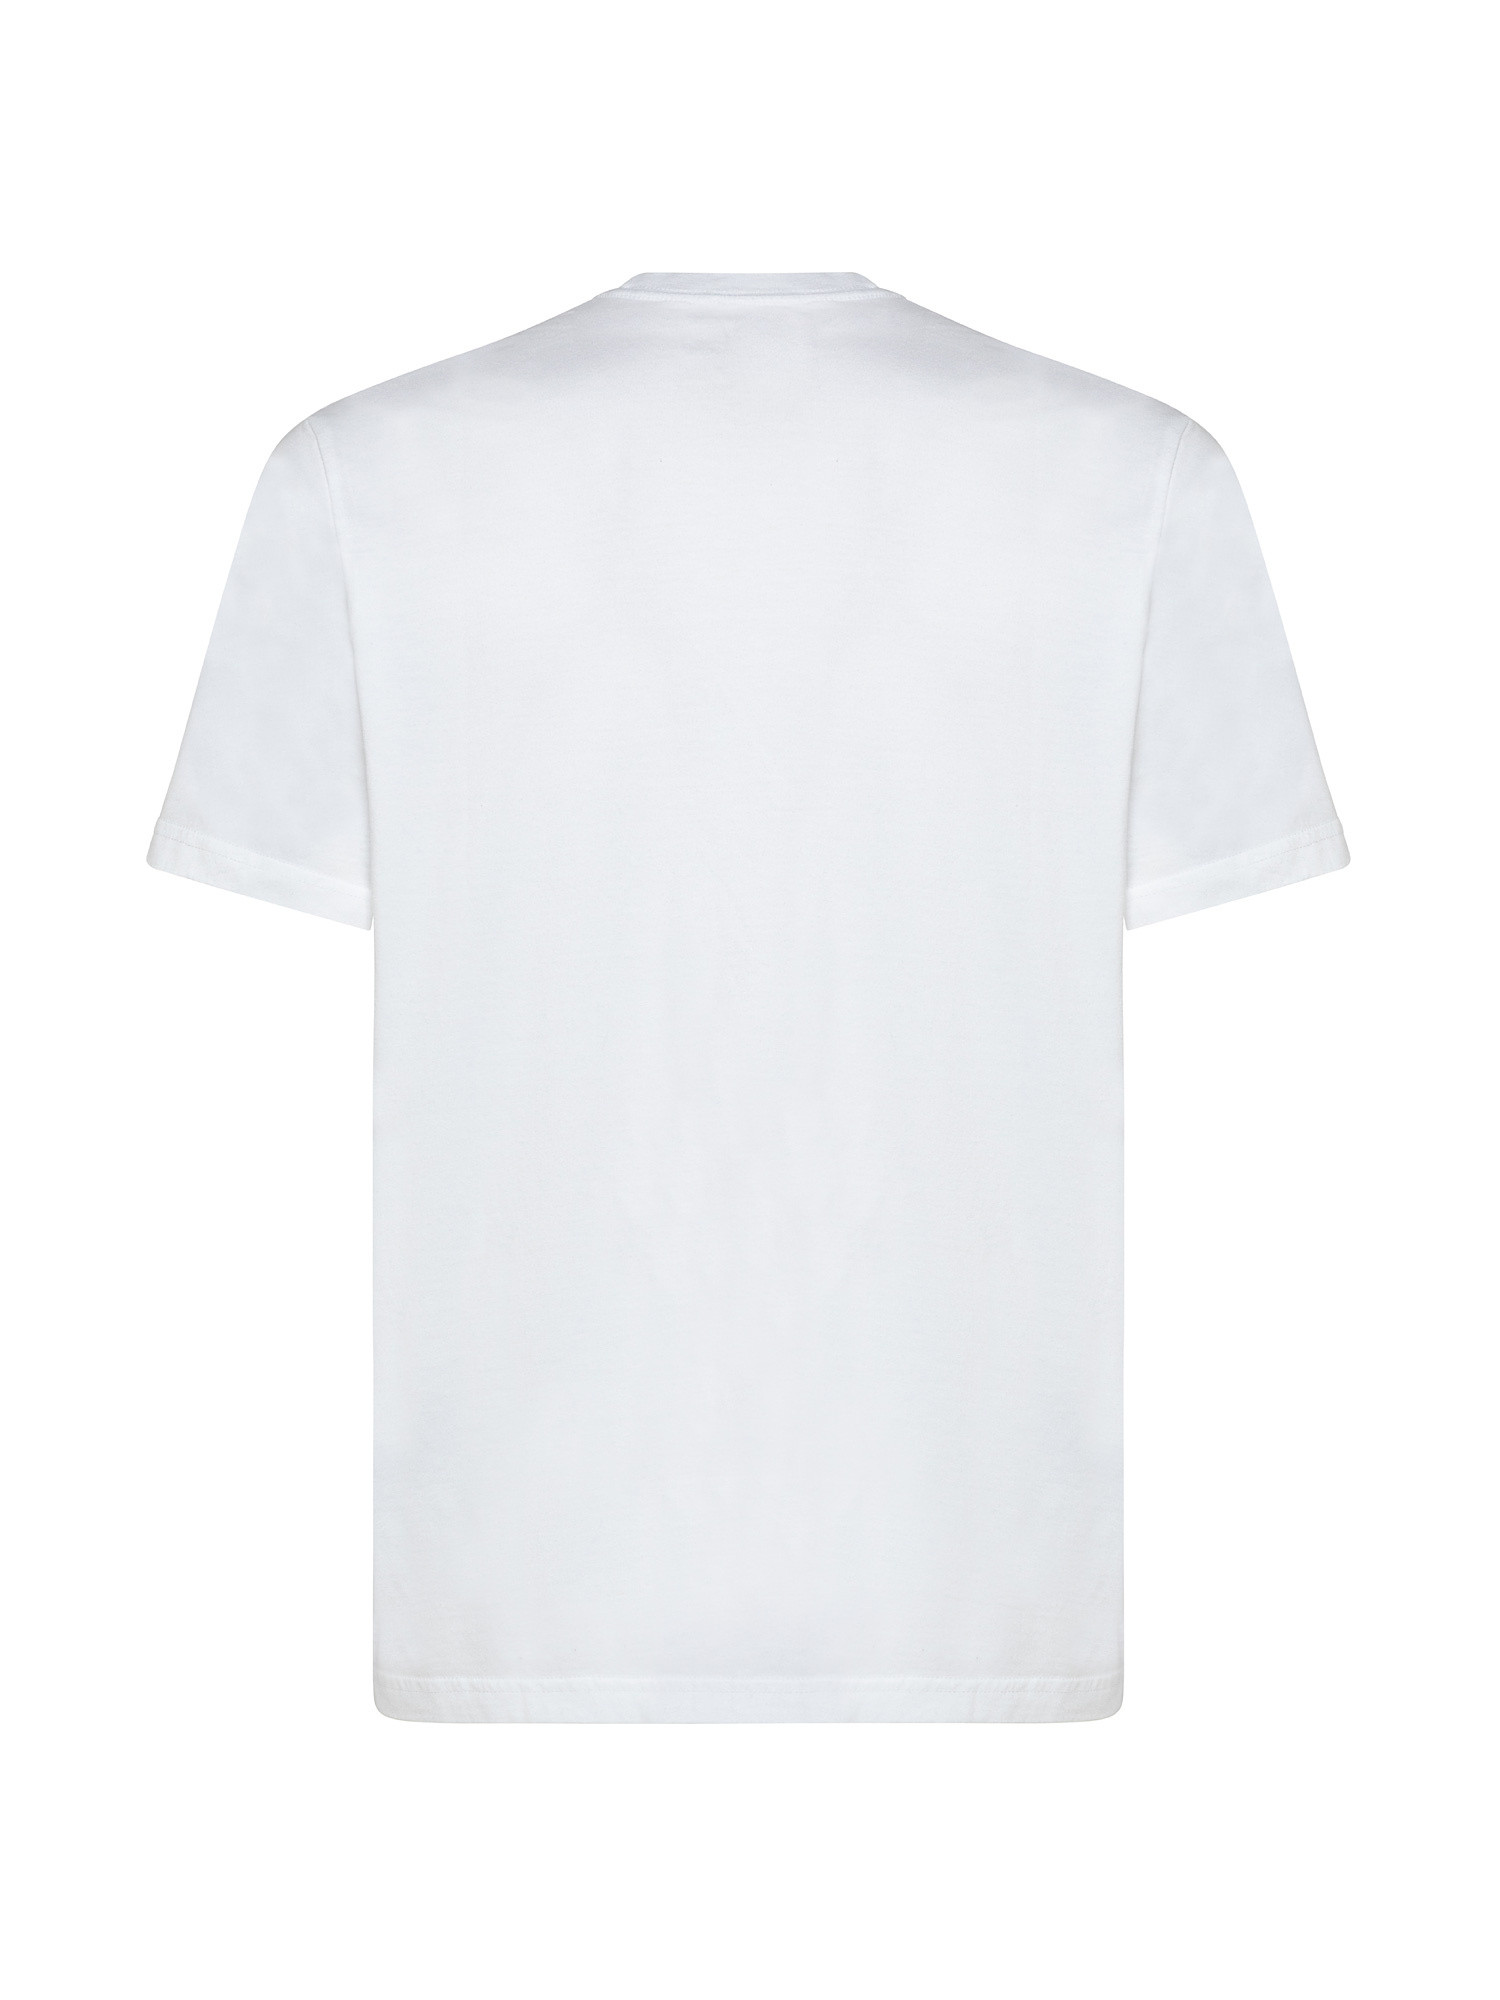 T-shirt Serif relaxed, Bianco, large